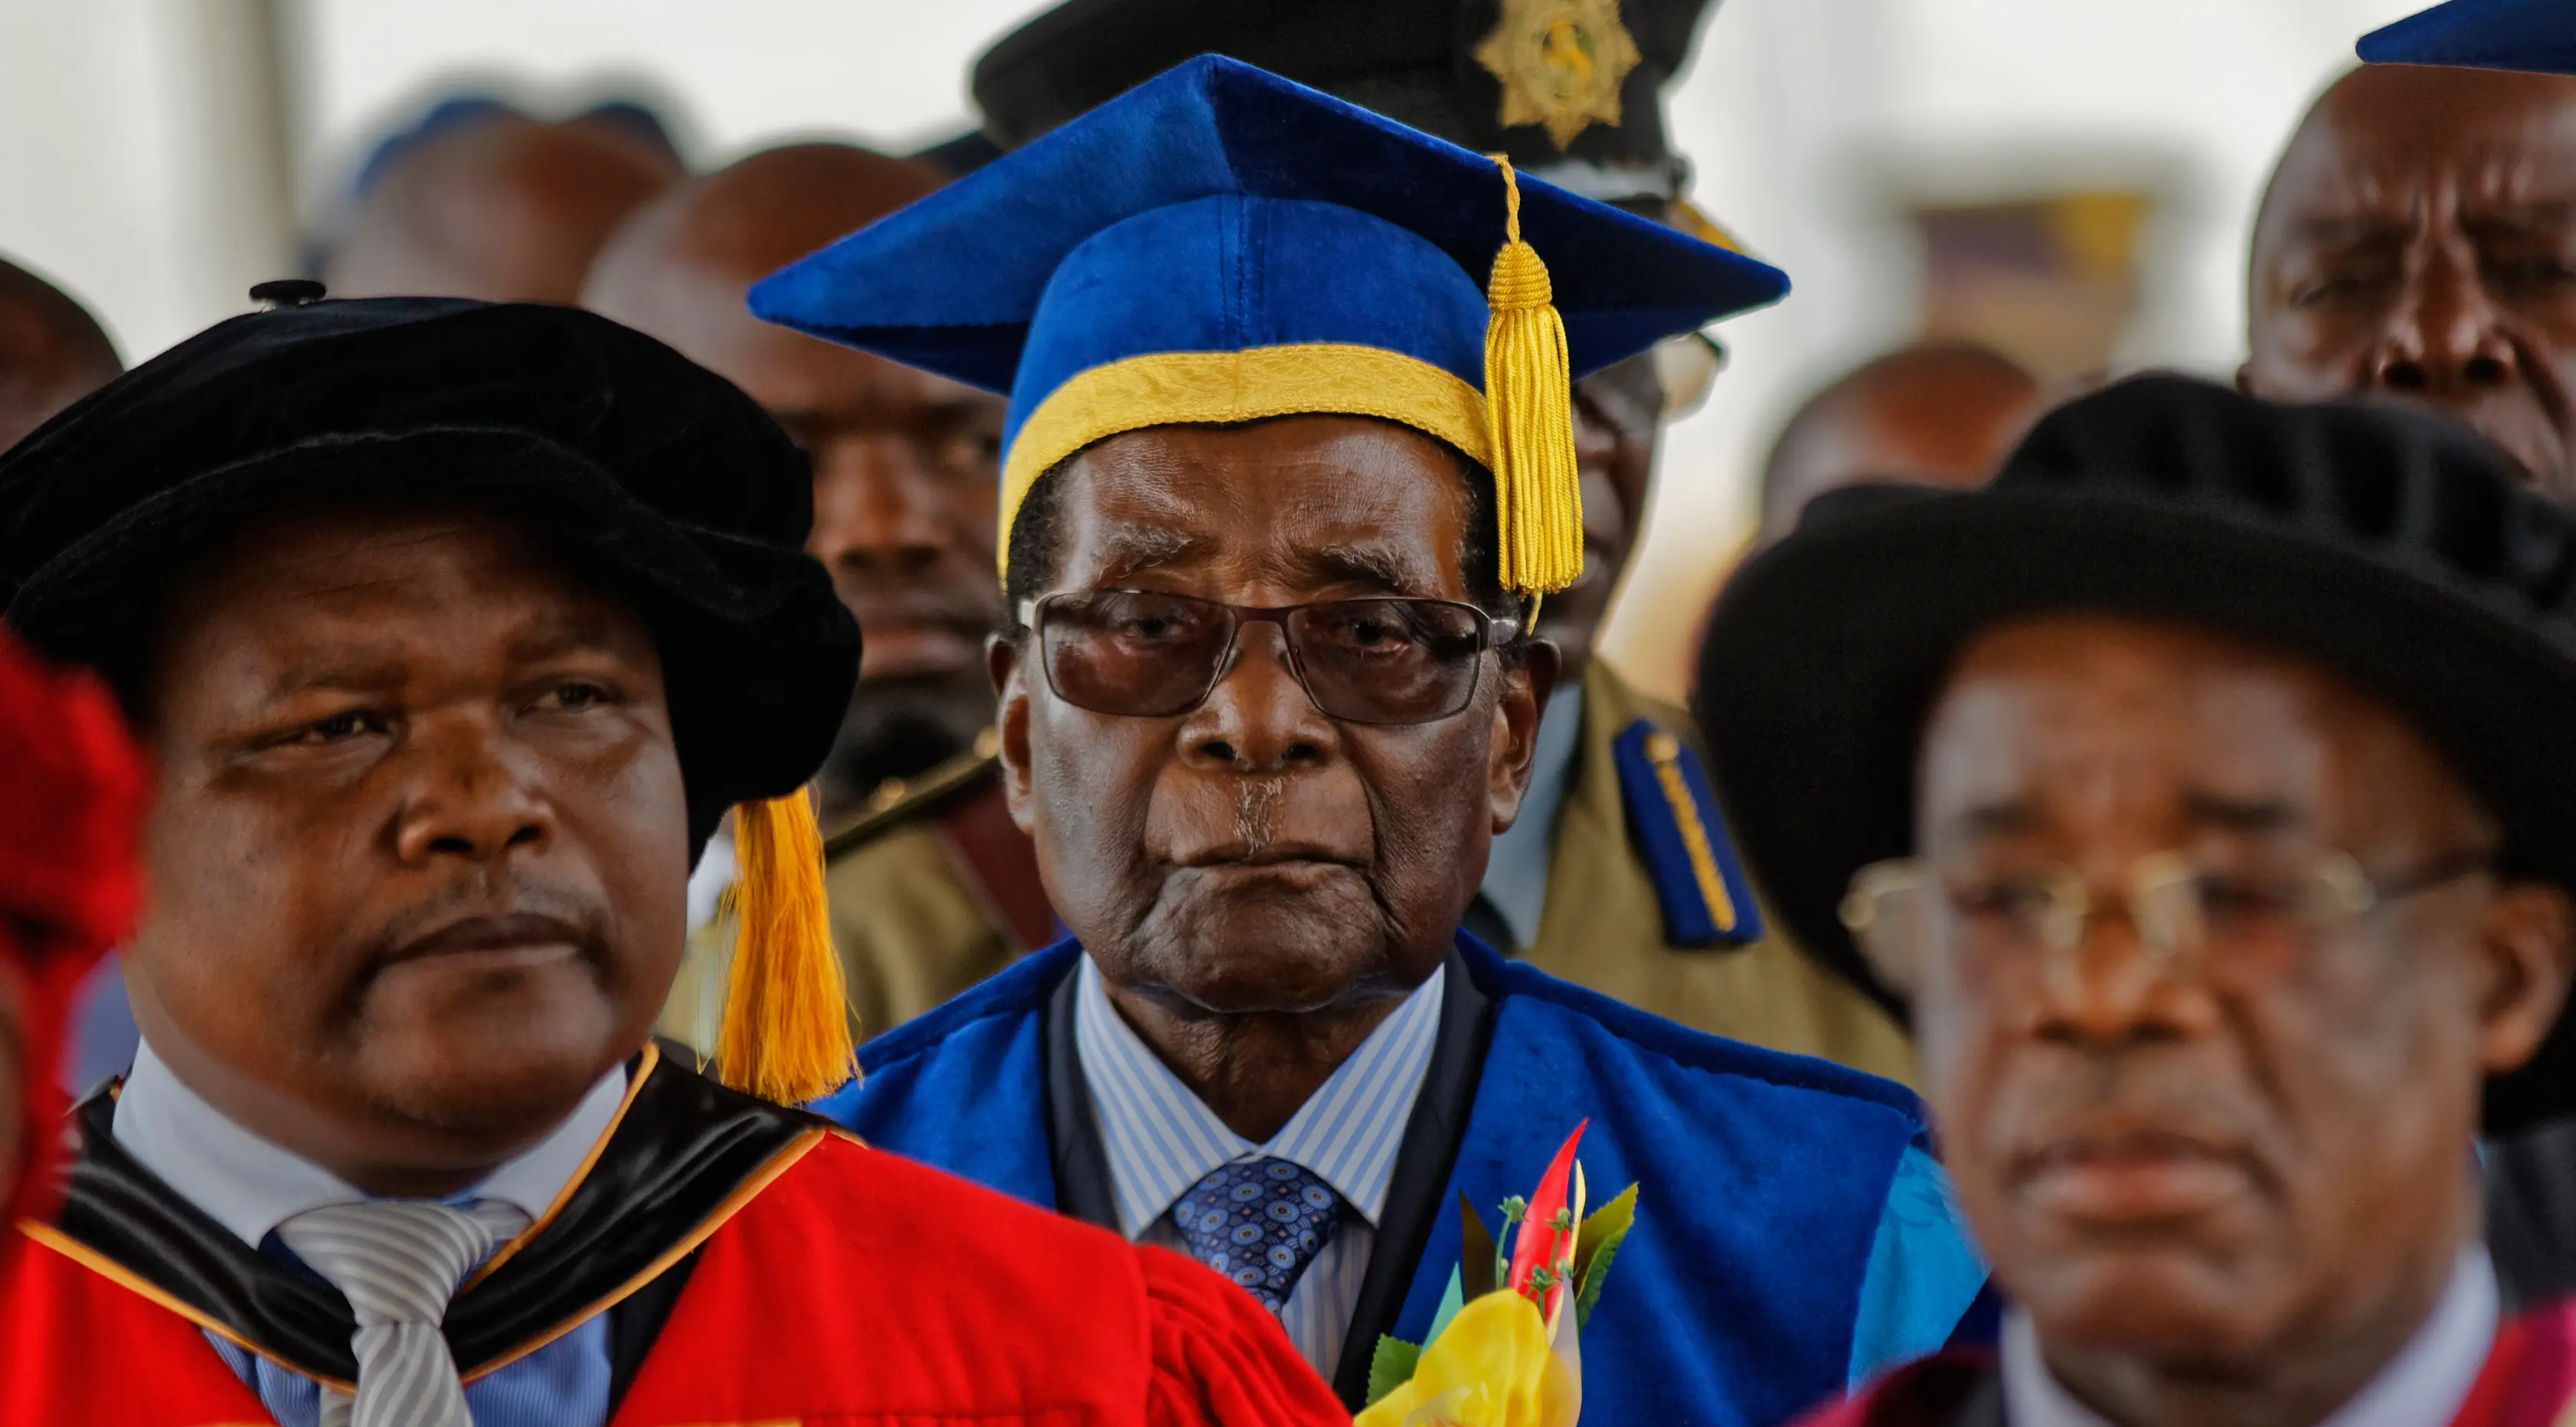 Presiden Zimbabwe, Robert Mugabe tiba untuk menghadiri upacara wisuda mahasiswa Universitas Terbuka Zimbabwe di pinggiran Harare, Jumat (17/11). Pasca berstatus sebagai tahanan rumah, untuk pertama kali Mugabe muncul di muka publik. (AP Photo/Ben Curtis)